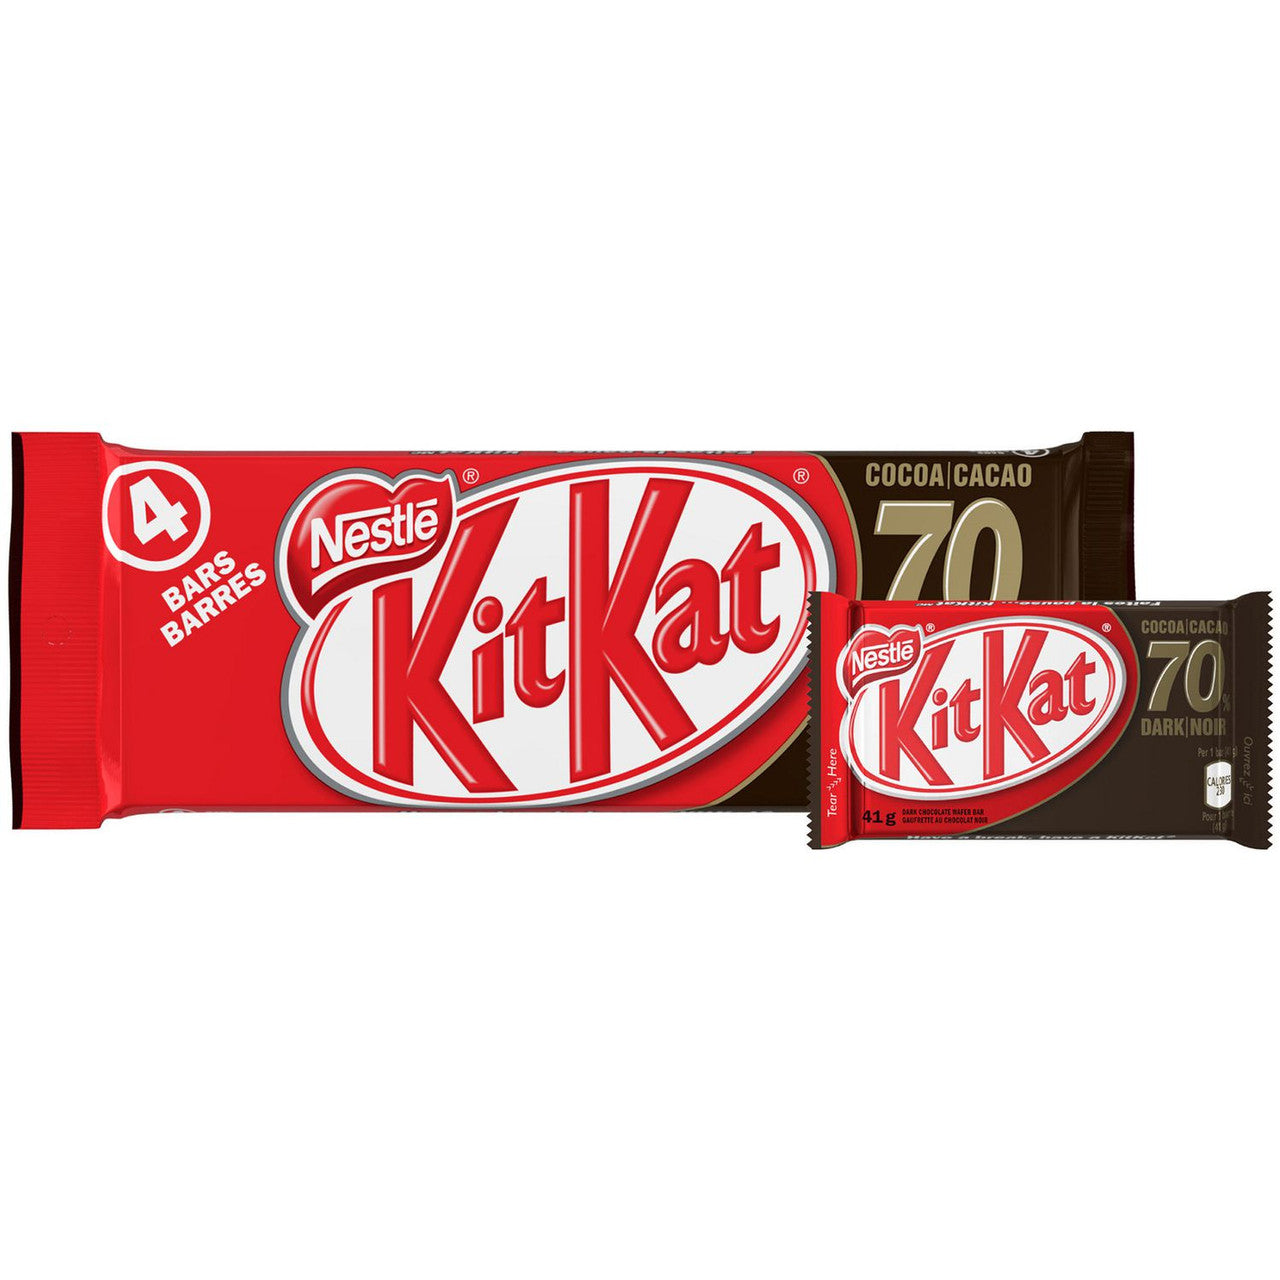 Nestle Kit Kat Dark Bar 70% Cocoa, 41g/1.44oz. -24pk {Imported